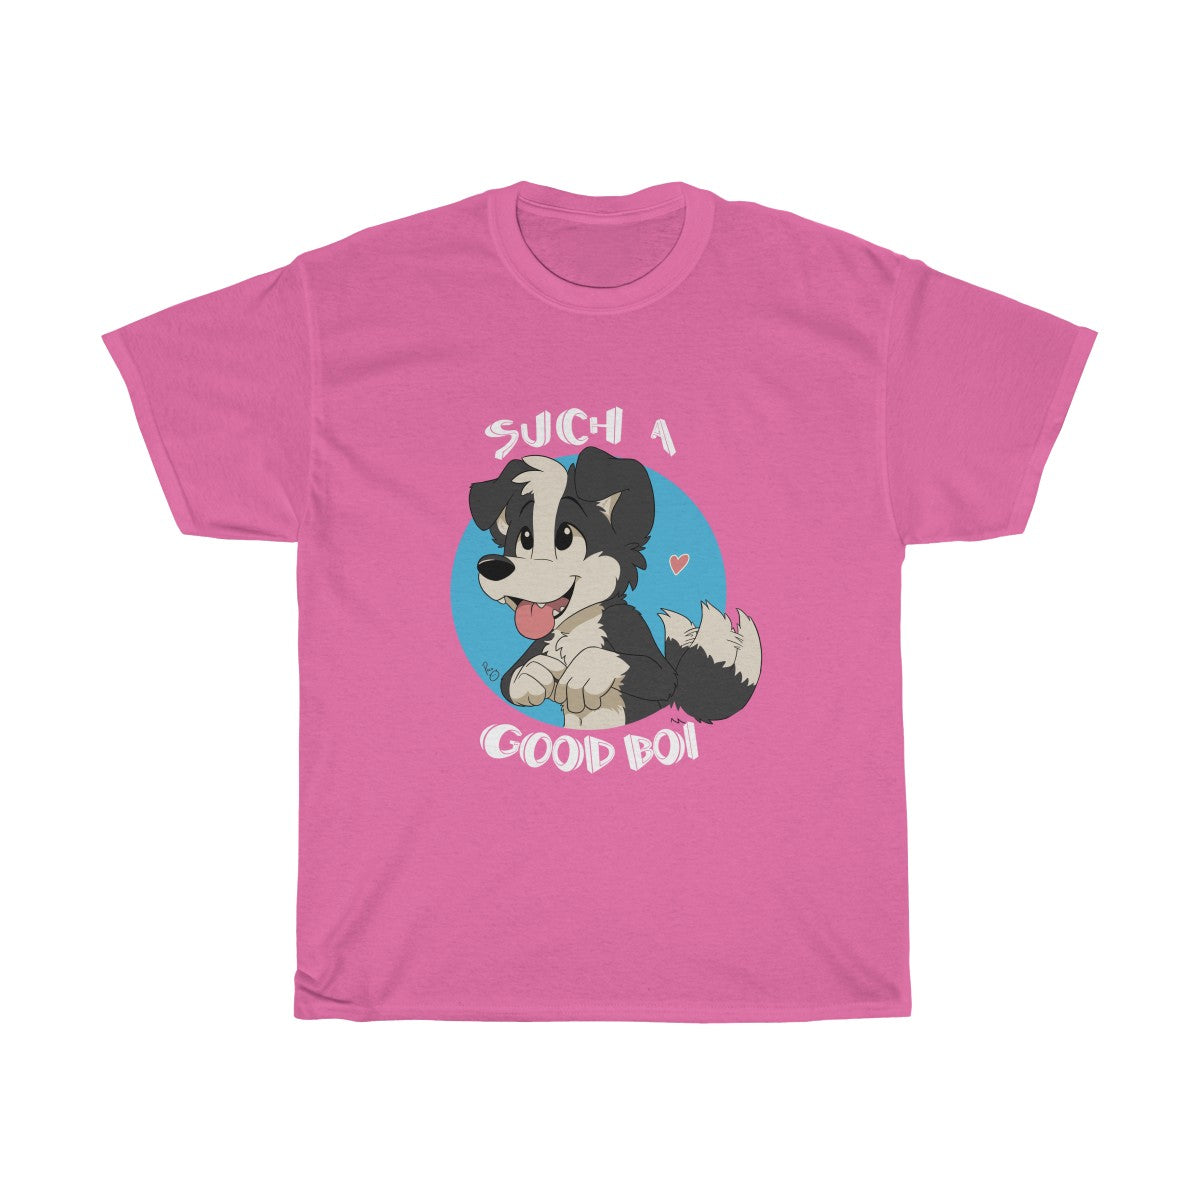 Such a Good Boy - T-Shirt T-Shirt Paco Panda Pink S 